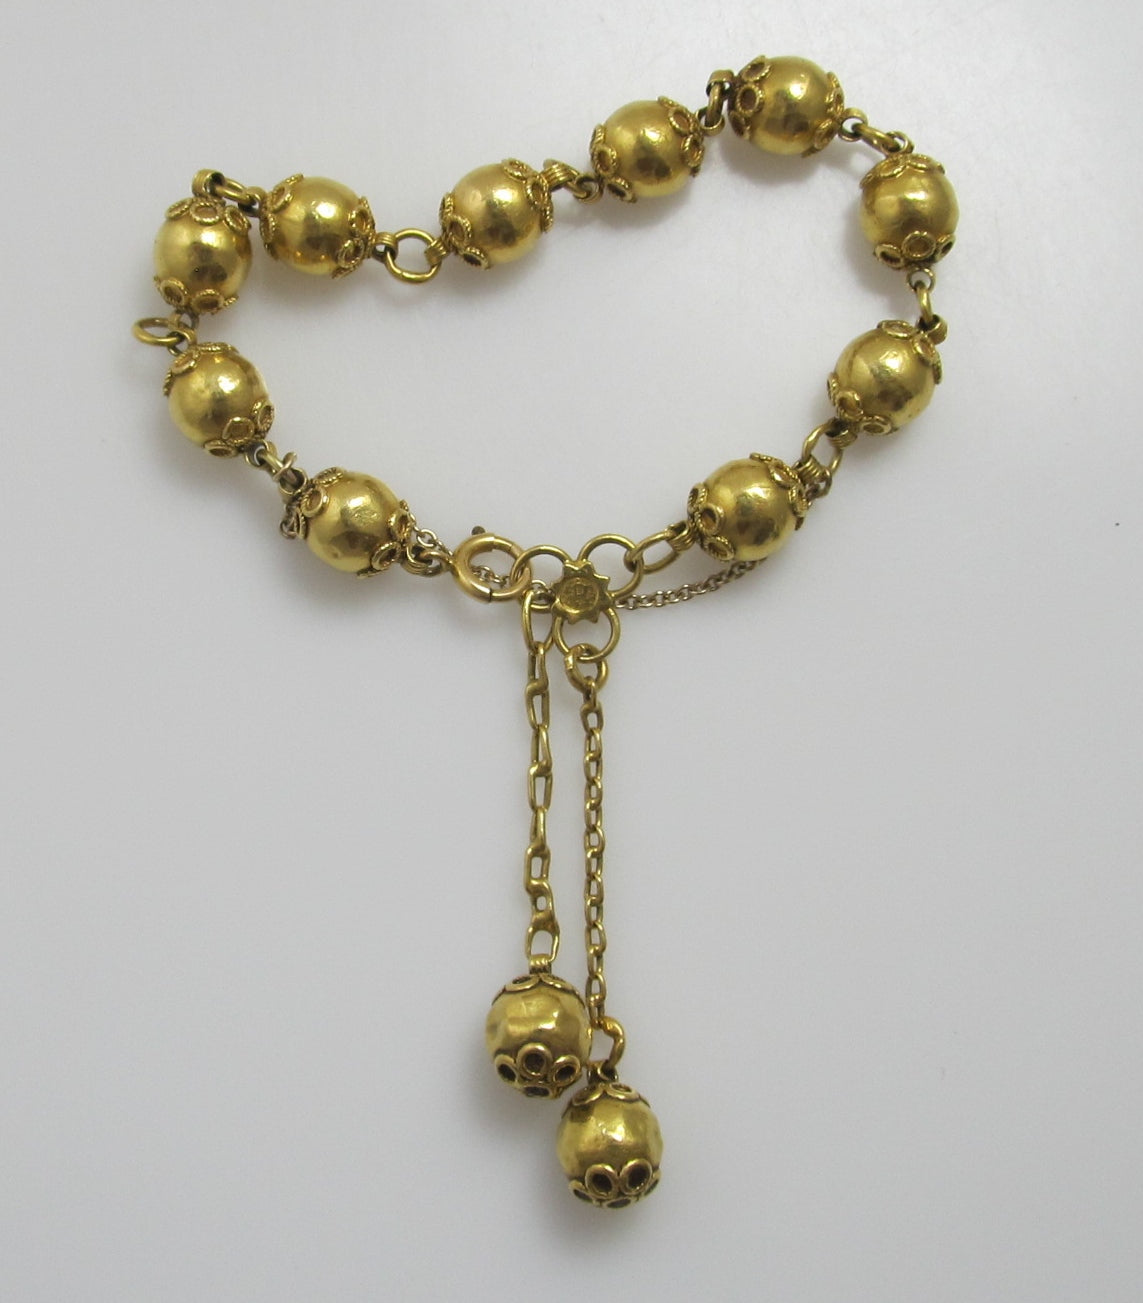 Vintage 22k yellow gold bead bracelet